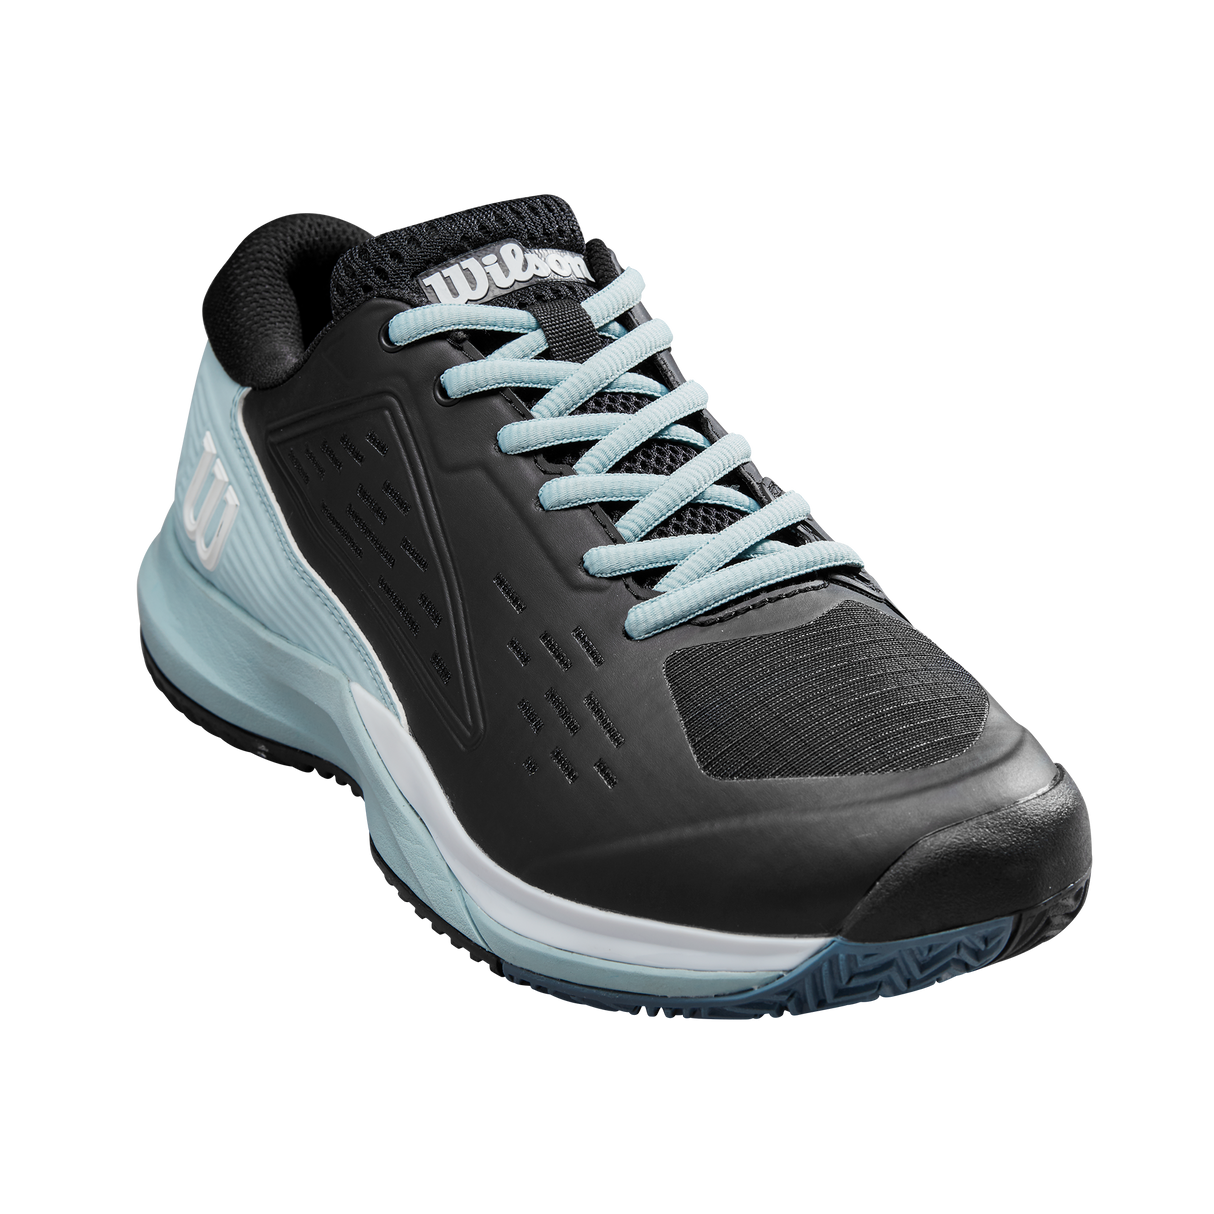 Wilson Pro Rush Ace Tennis Shoes (Ladies) - Black/Sterling Blue/White